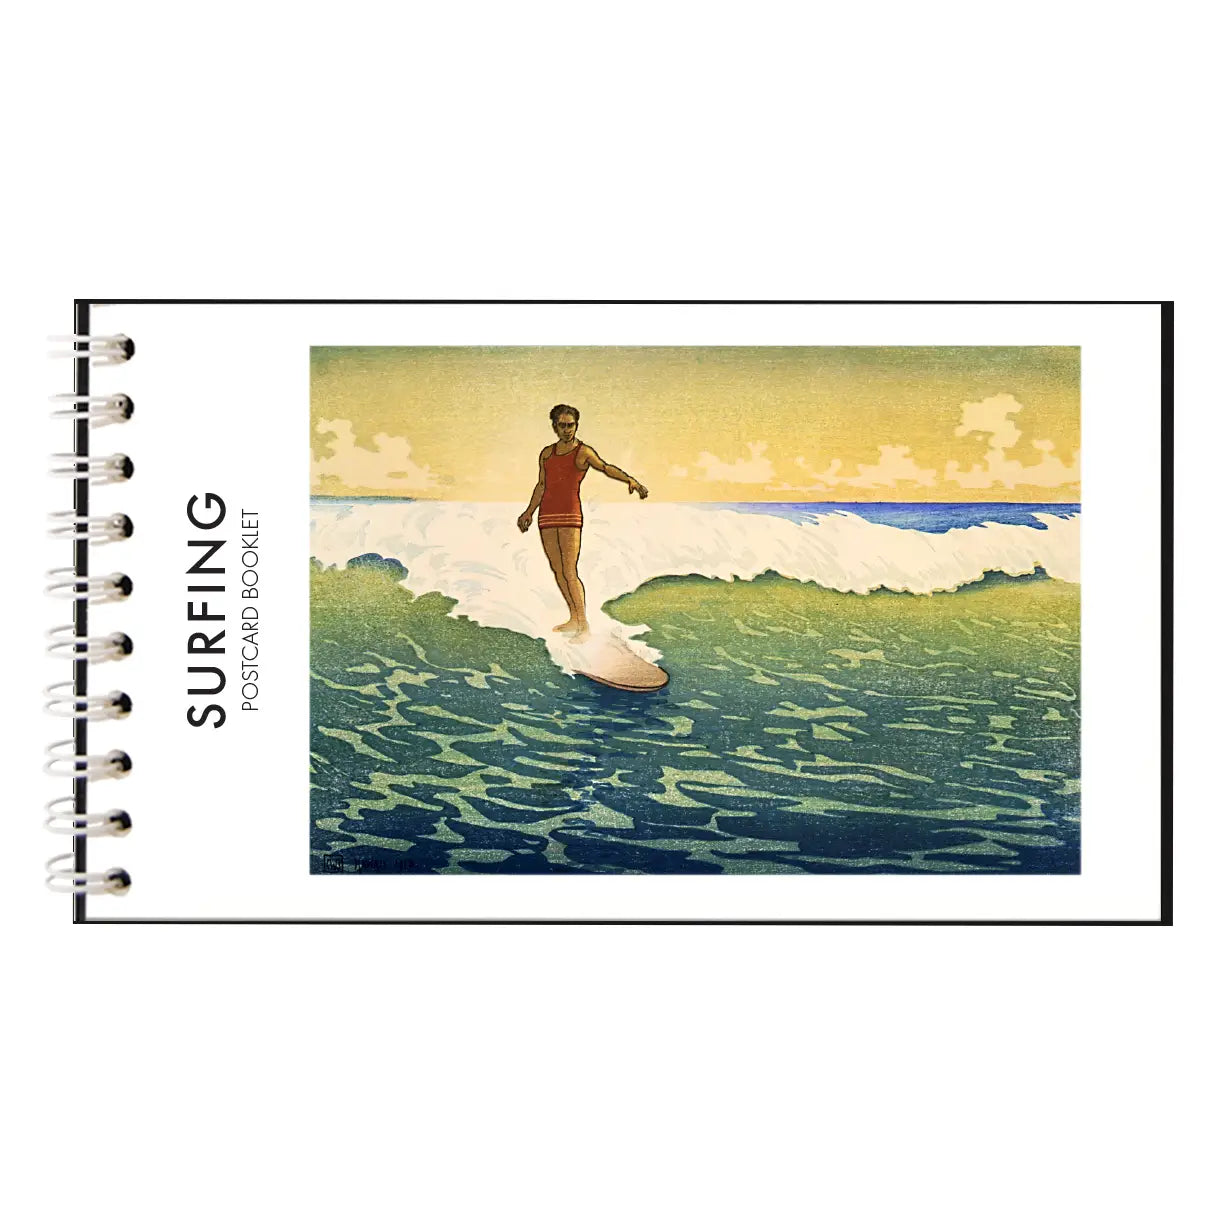 Surfing Postcard Booklet